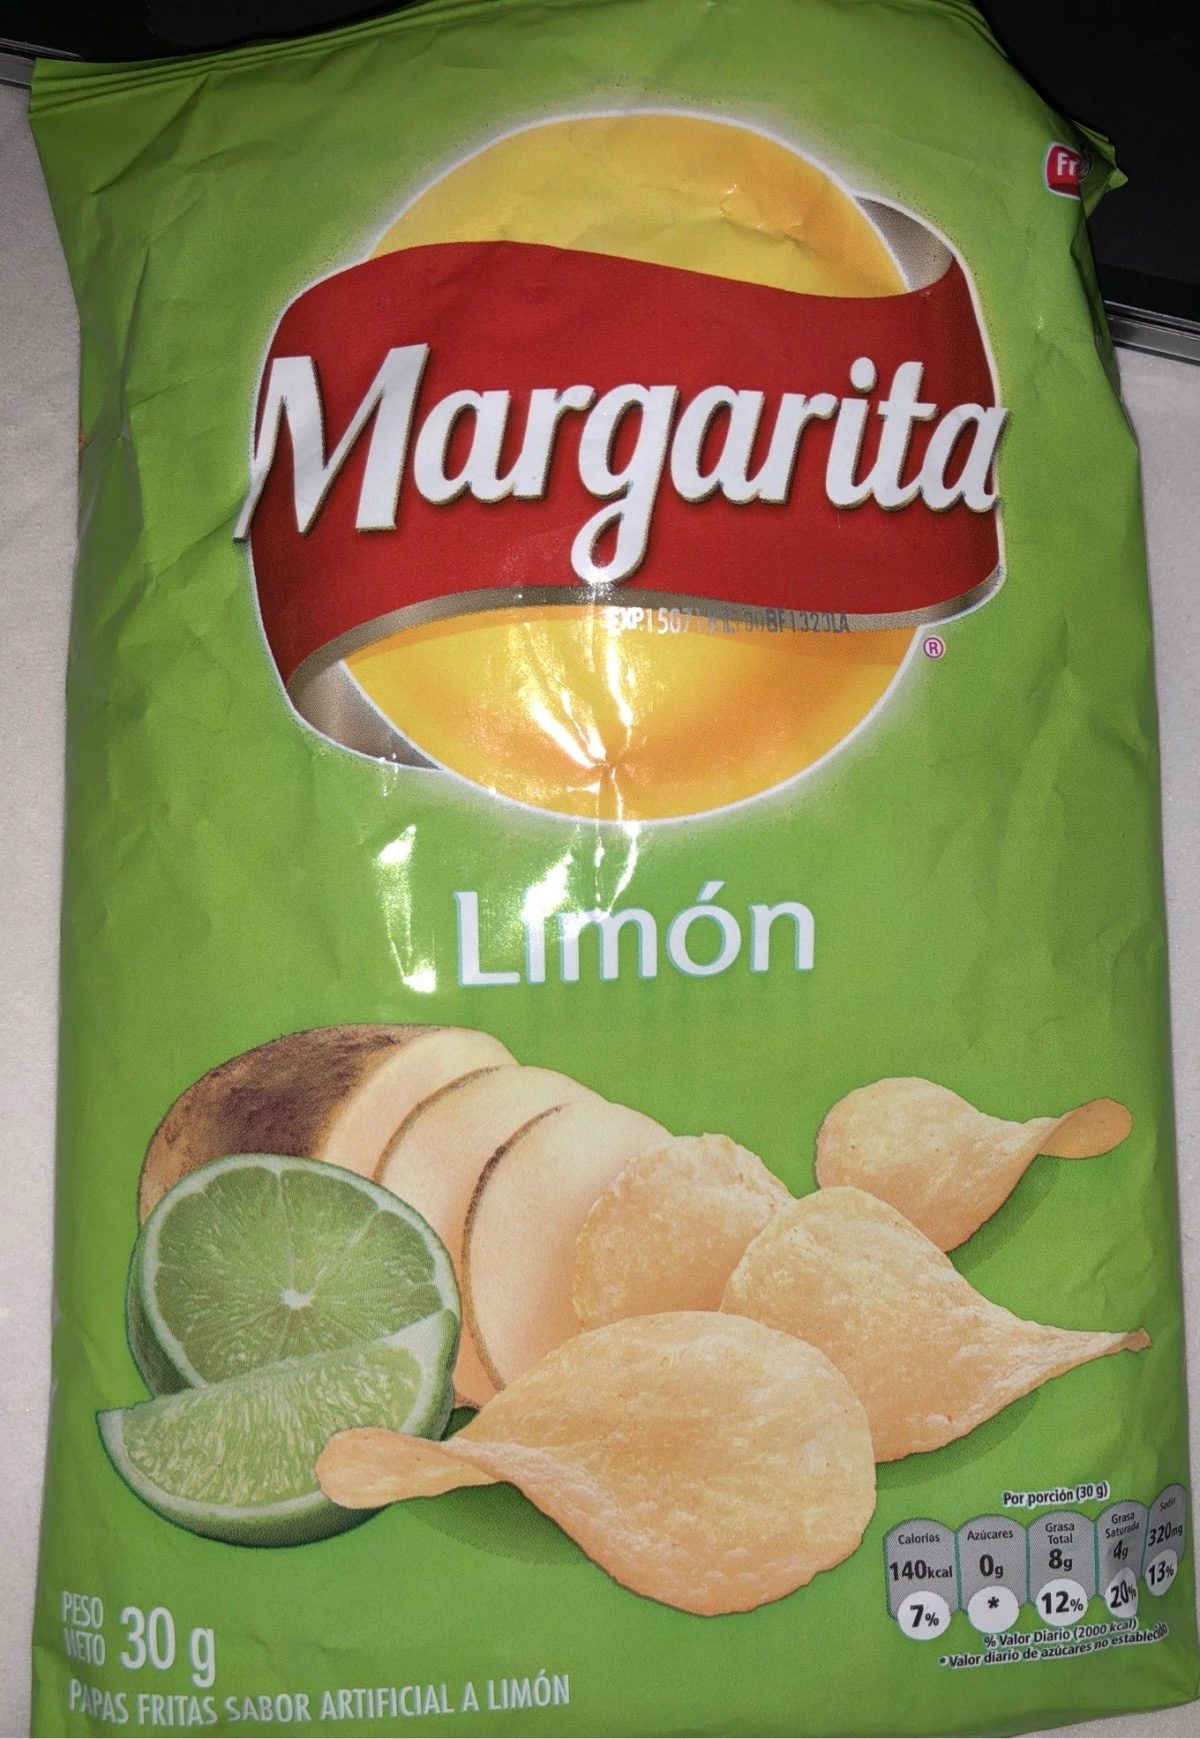 Margarita Limón - Product - es